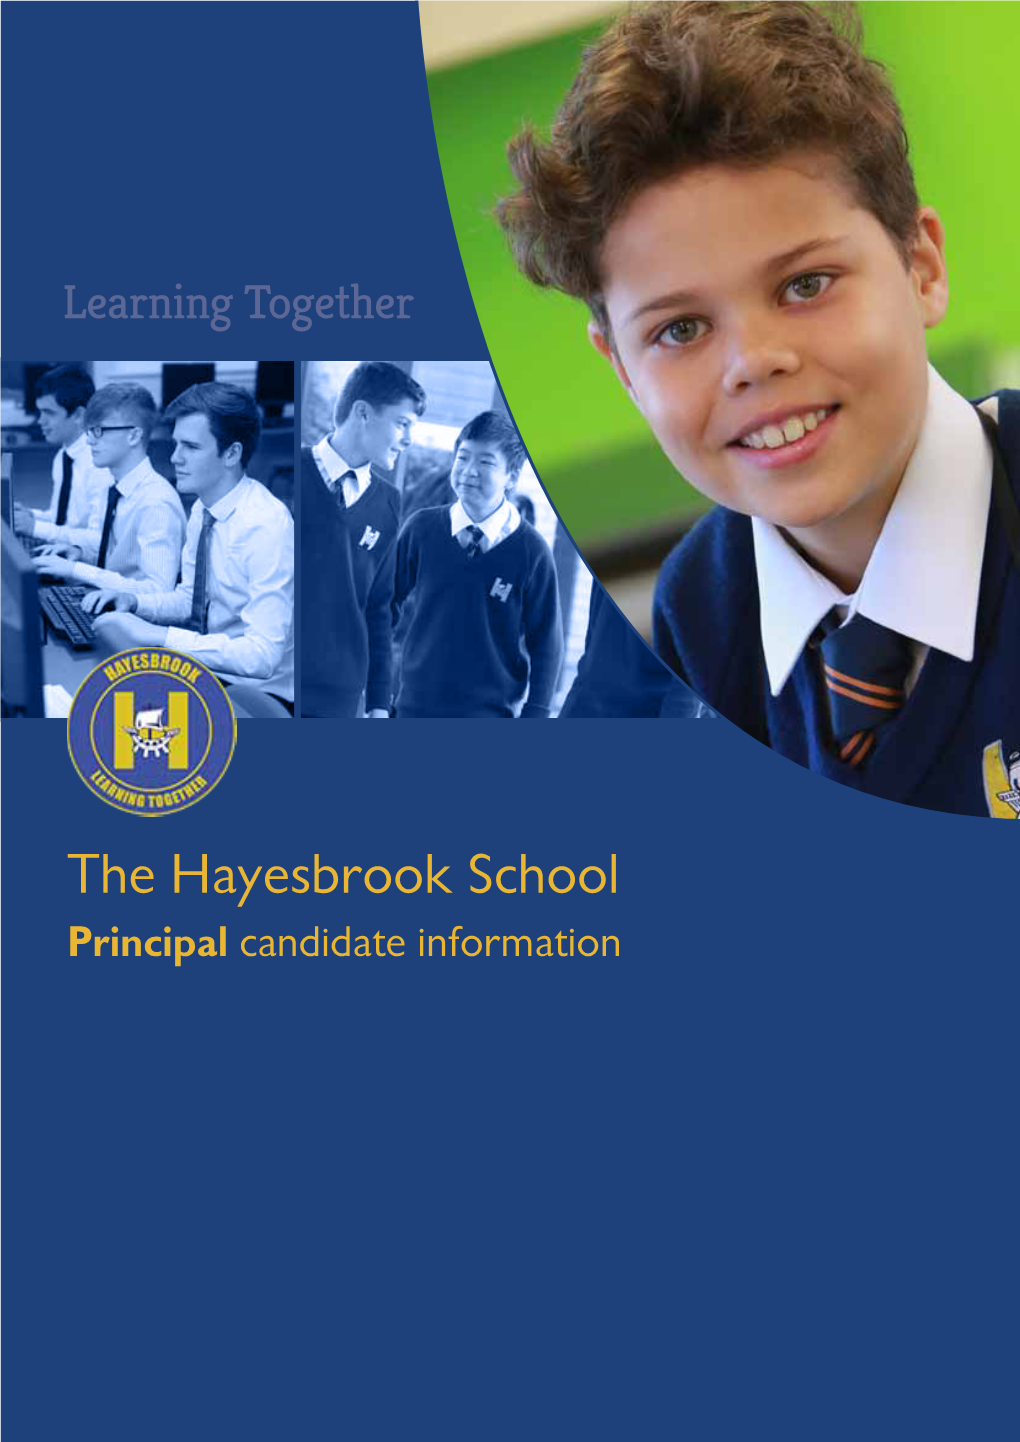 The Hayesbrook School Principal Candidate Information